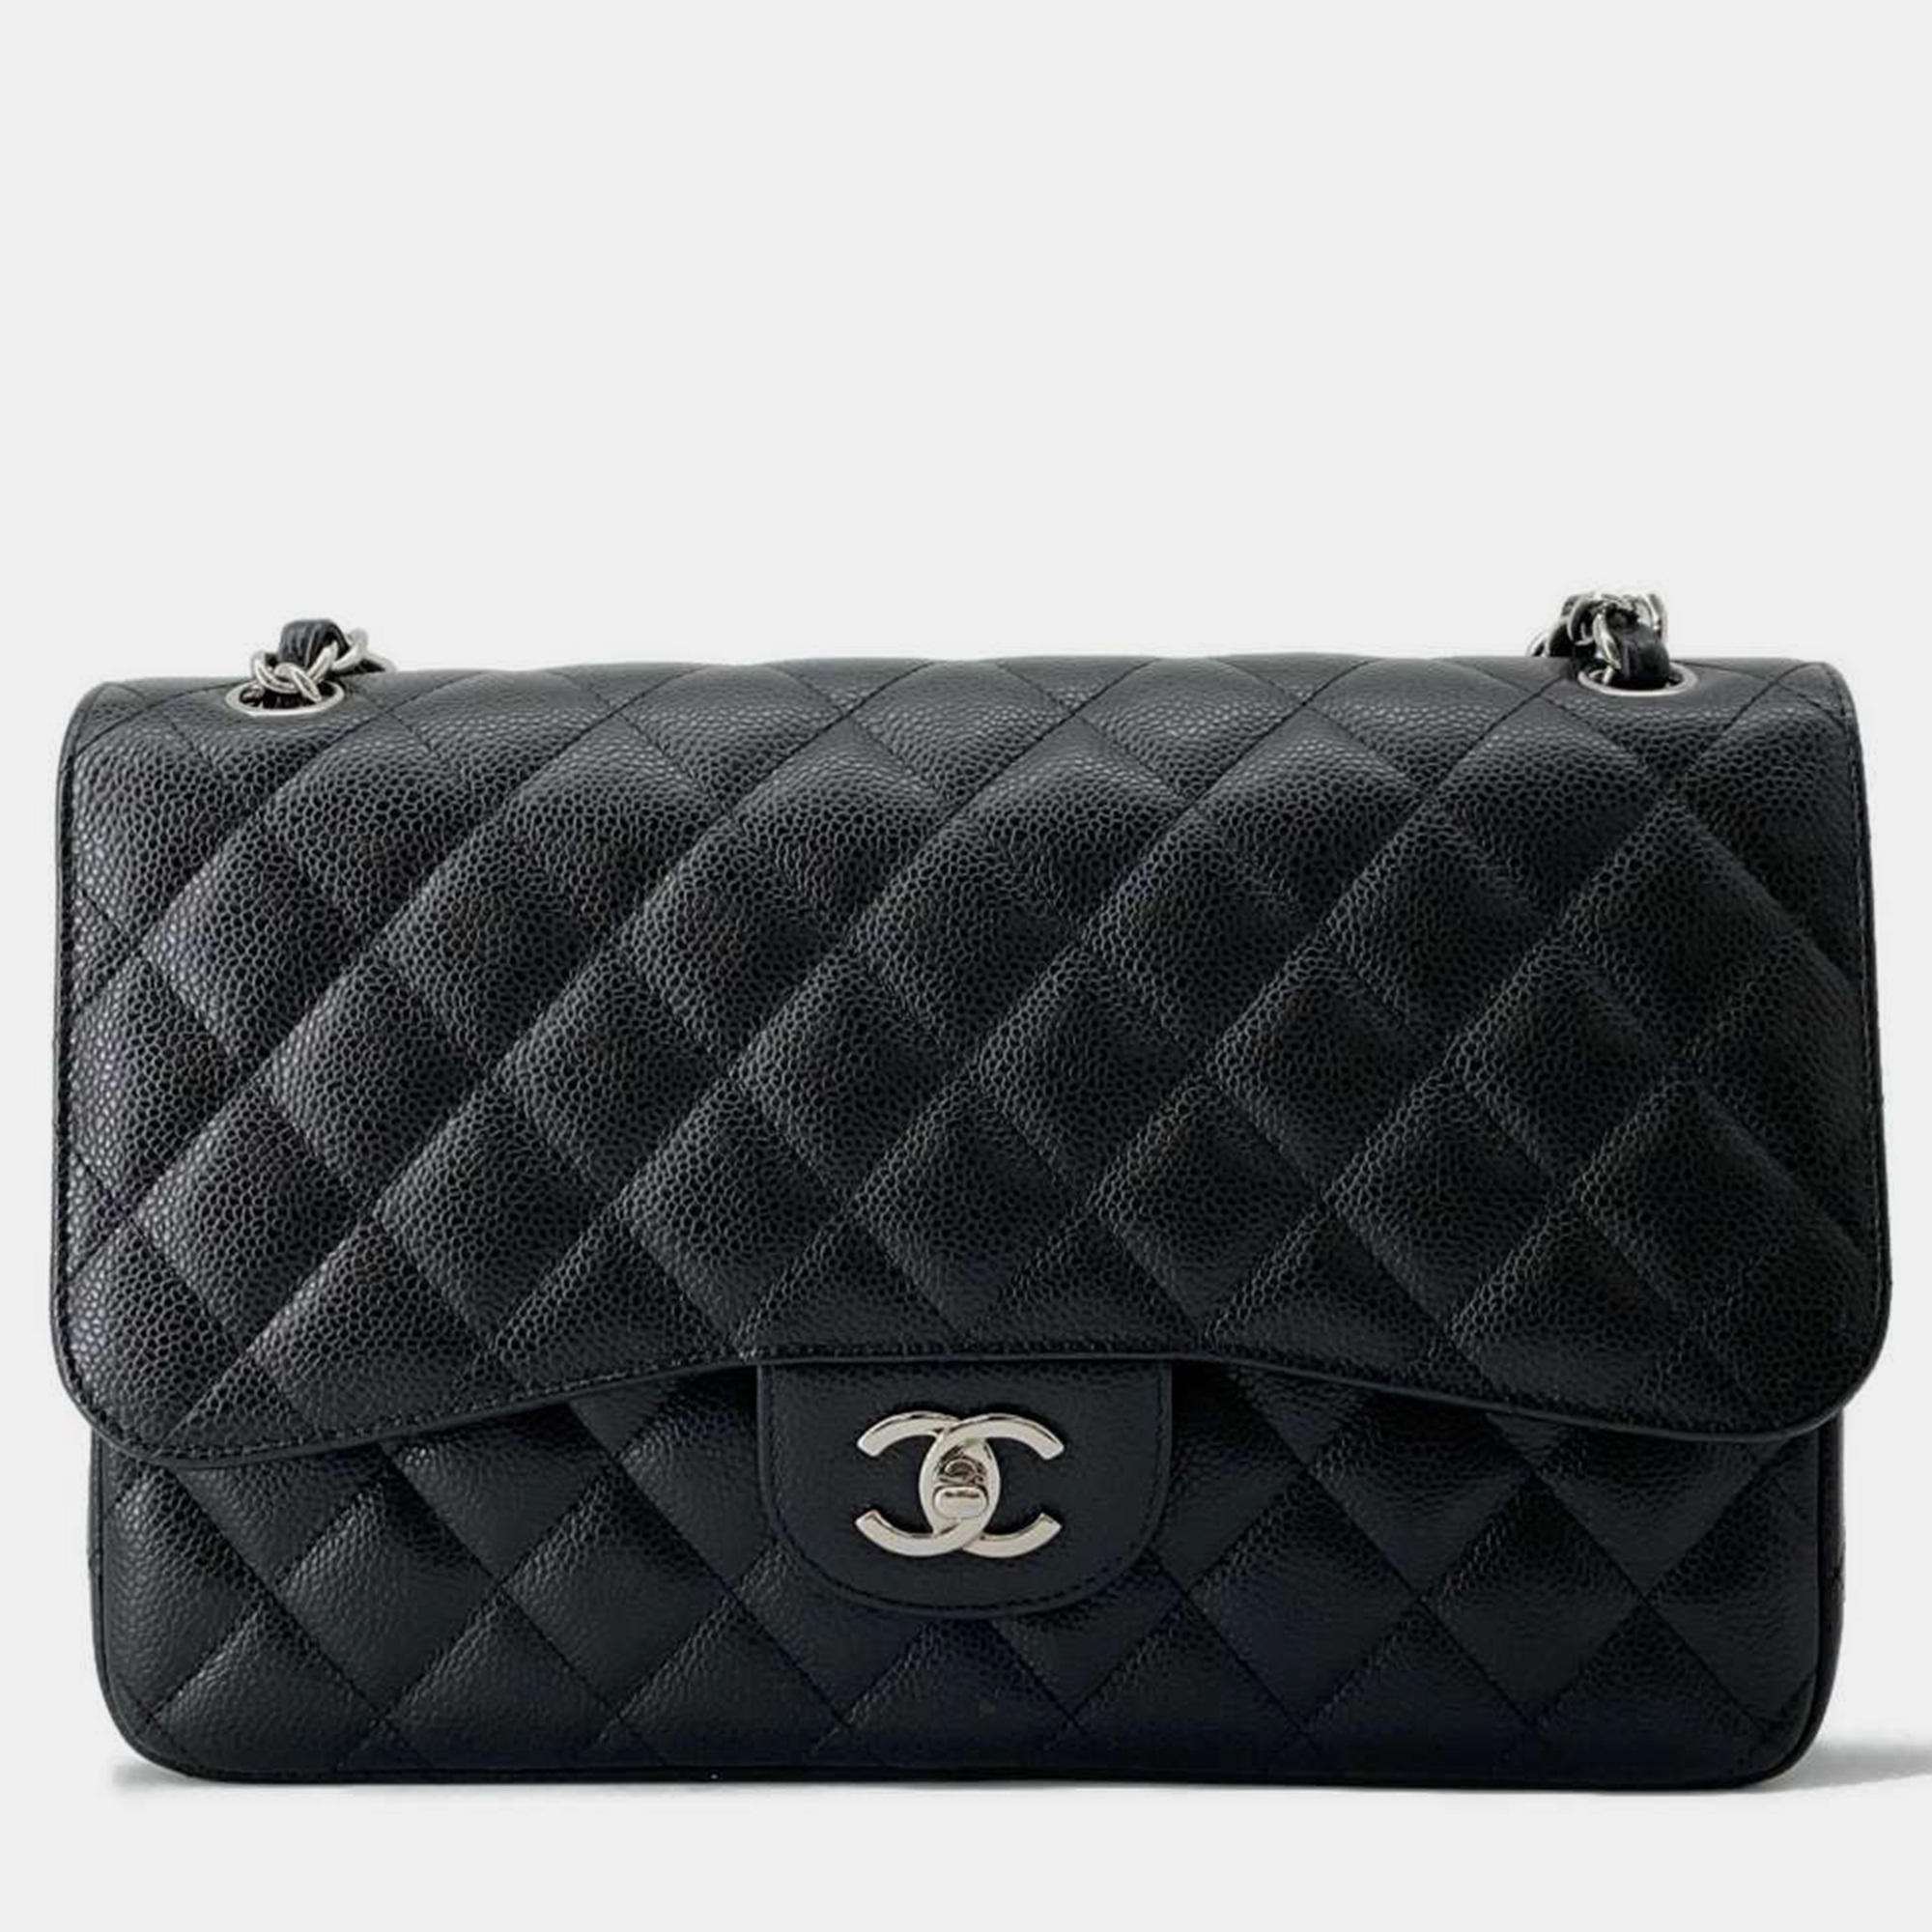 Chanel black leather classic double flap shoulder bag